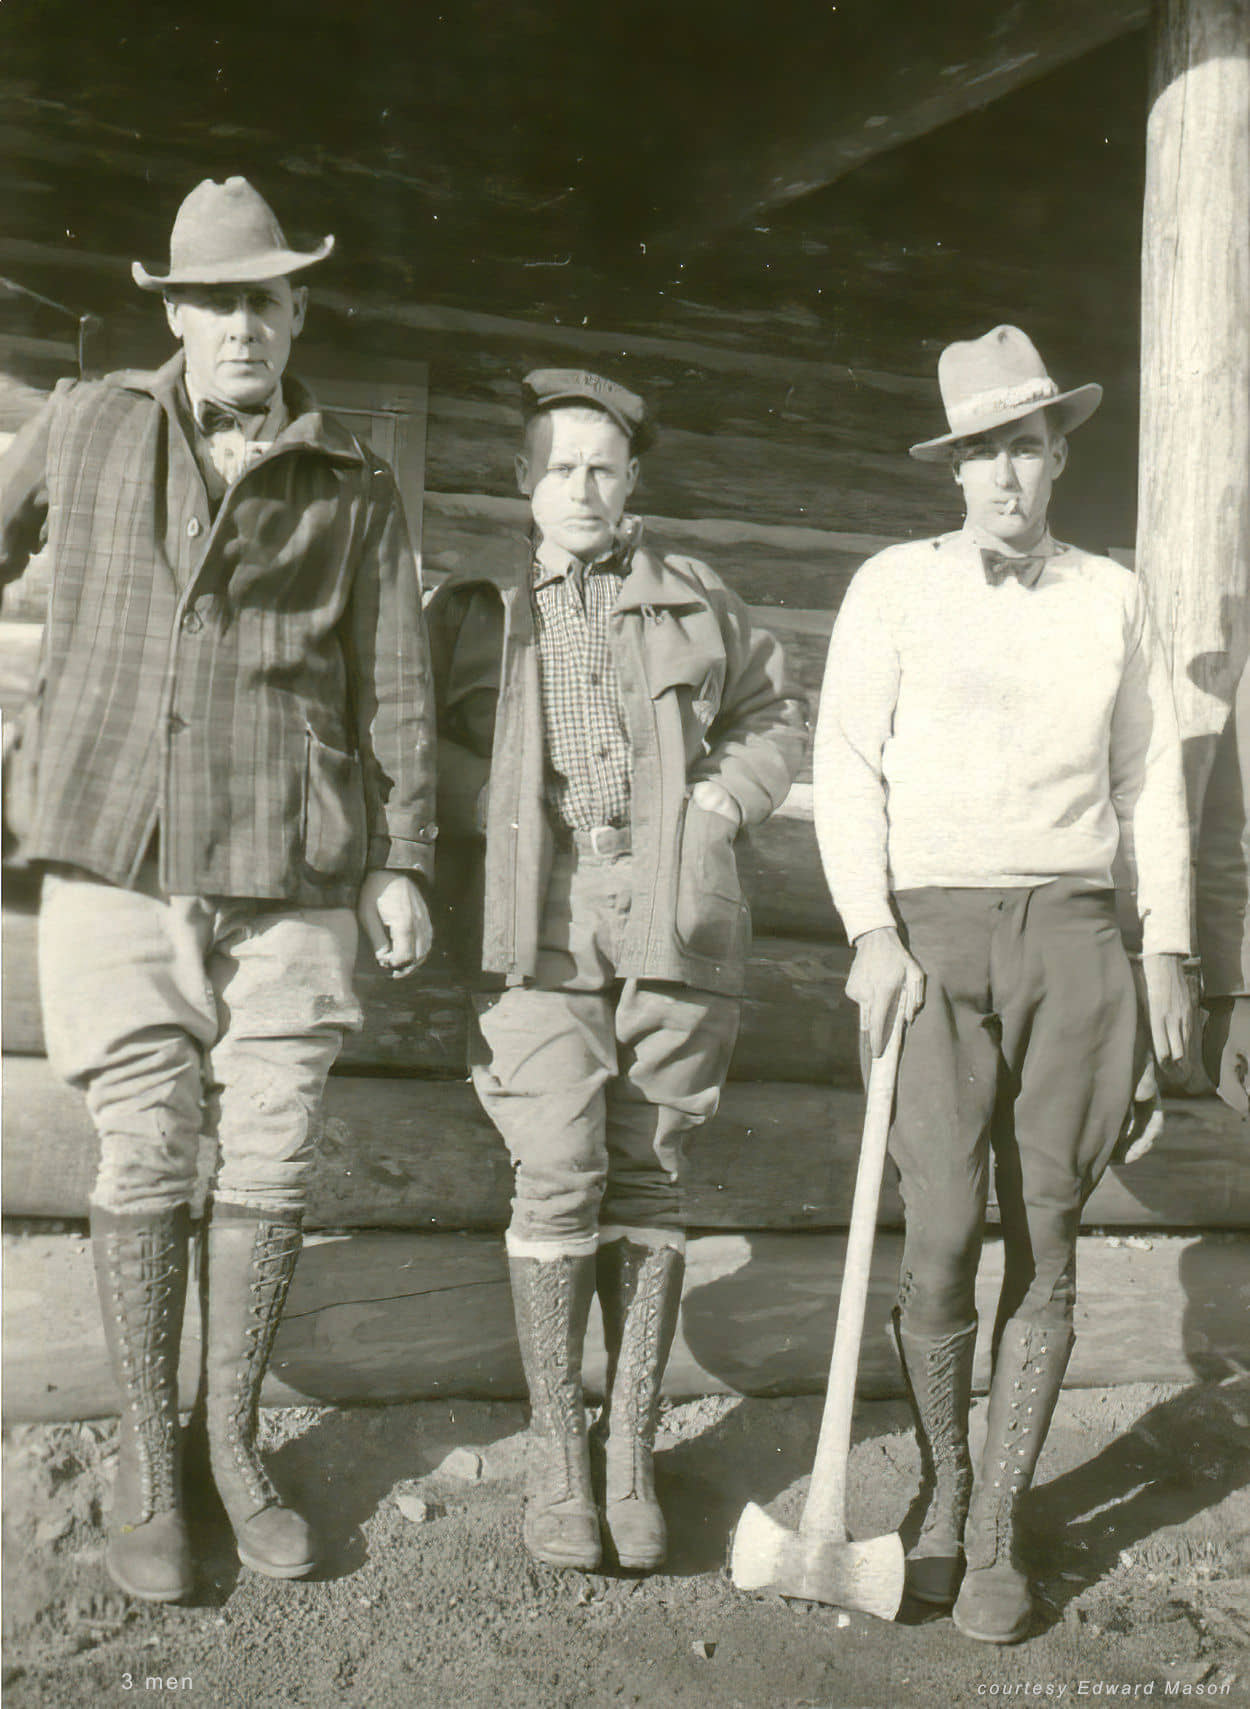 3 men wearing boots